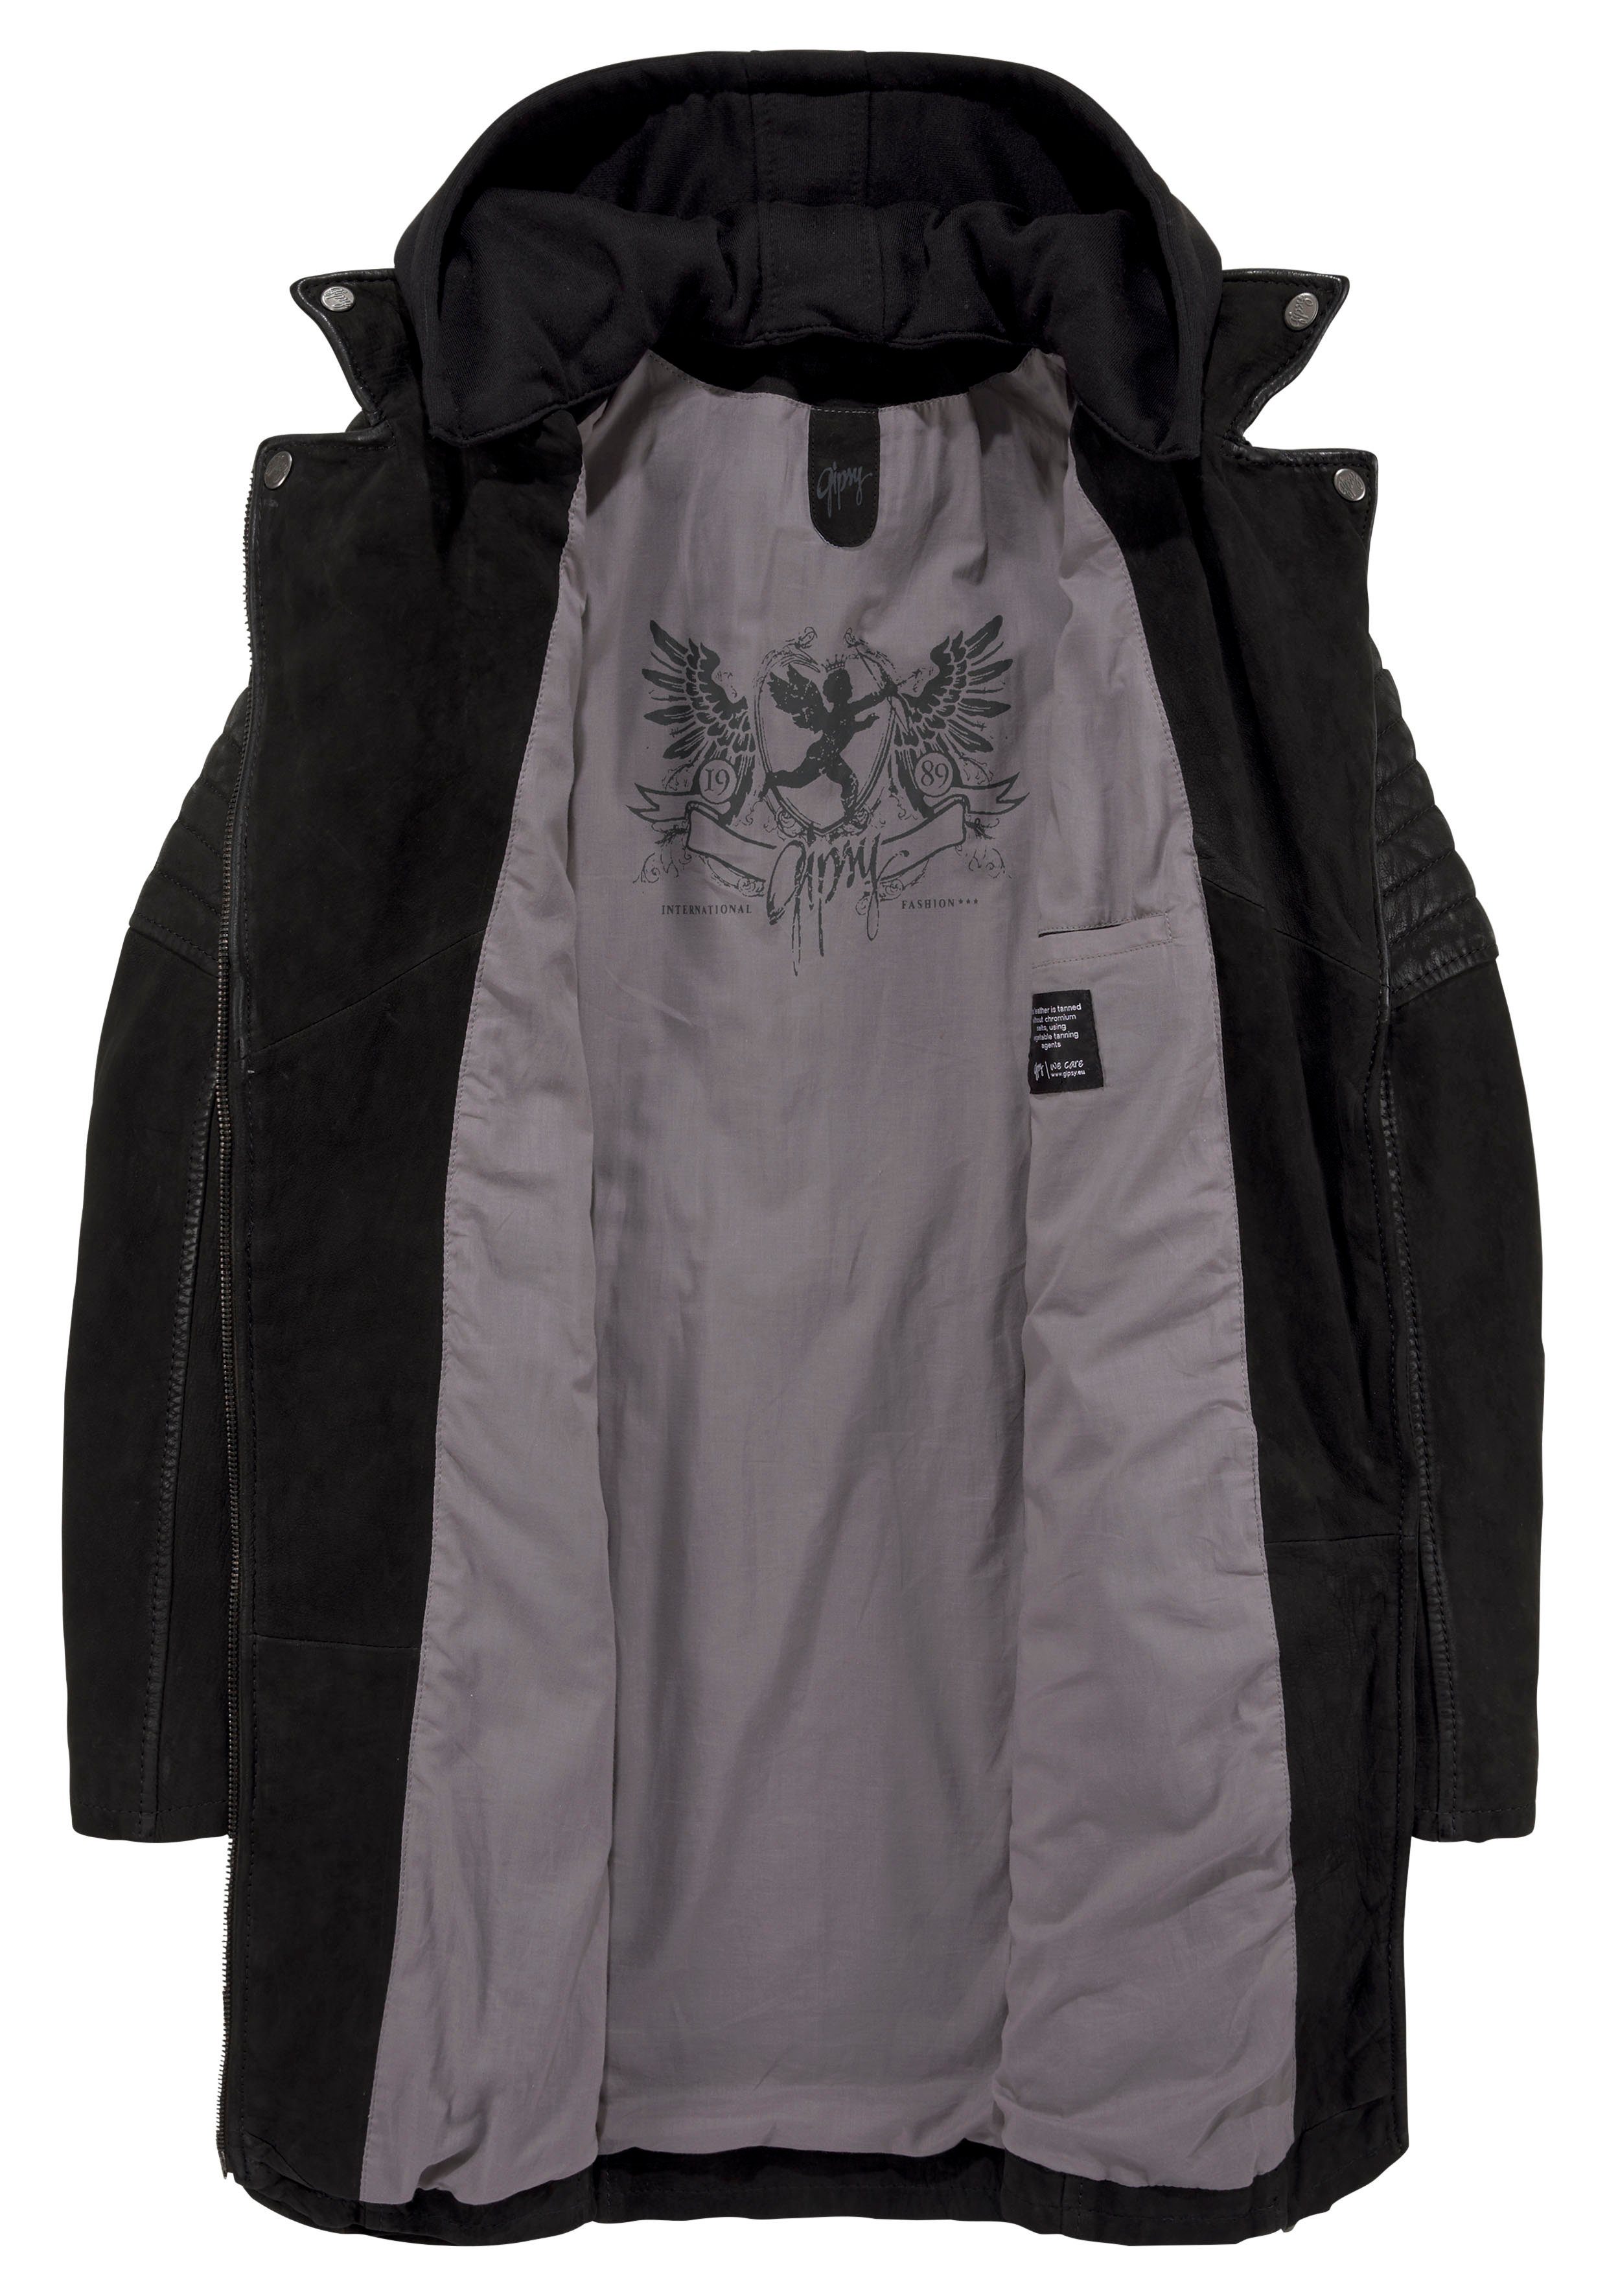 Kapuzen-Inlay mit Gipsy schwarz CYARA Lederjacke Lederjacke aus abnehmbarem Jerseyqualität